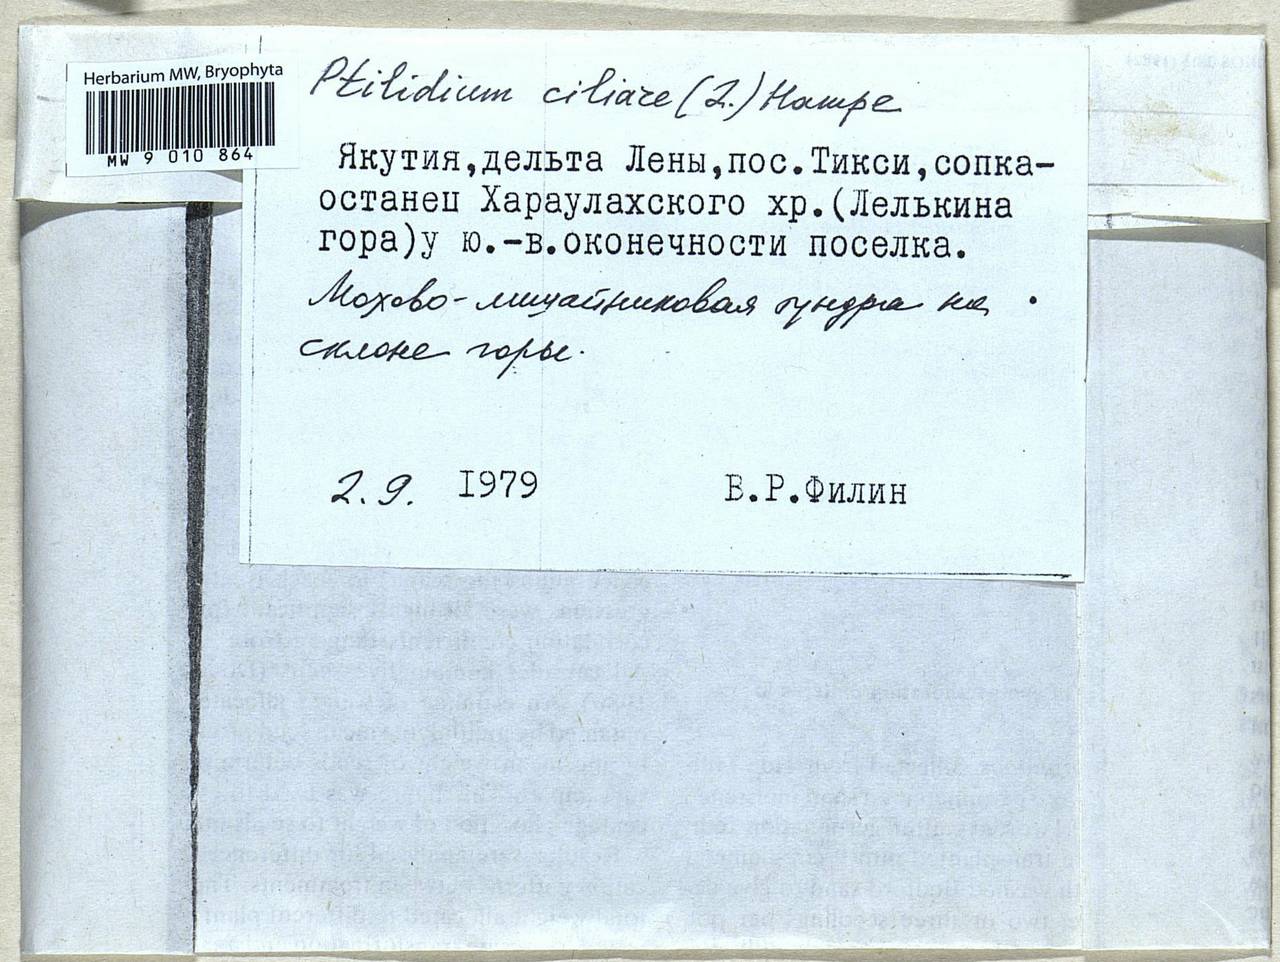 Ptilidium ciliare (L.) Hampe, Bryophytes, Bryophytes - Yakutia (B19) (Russia)